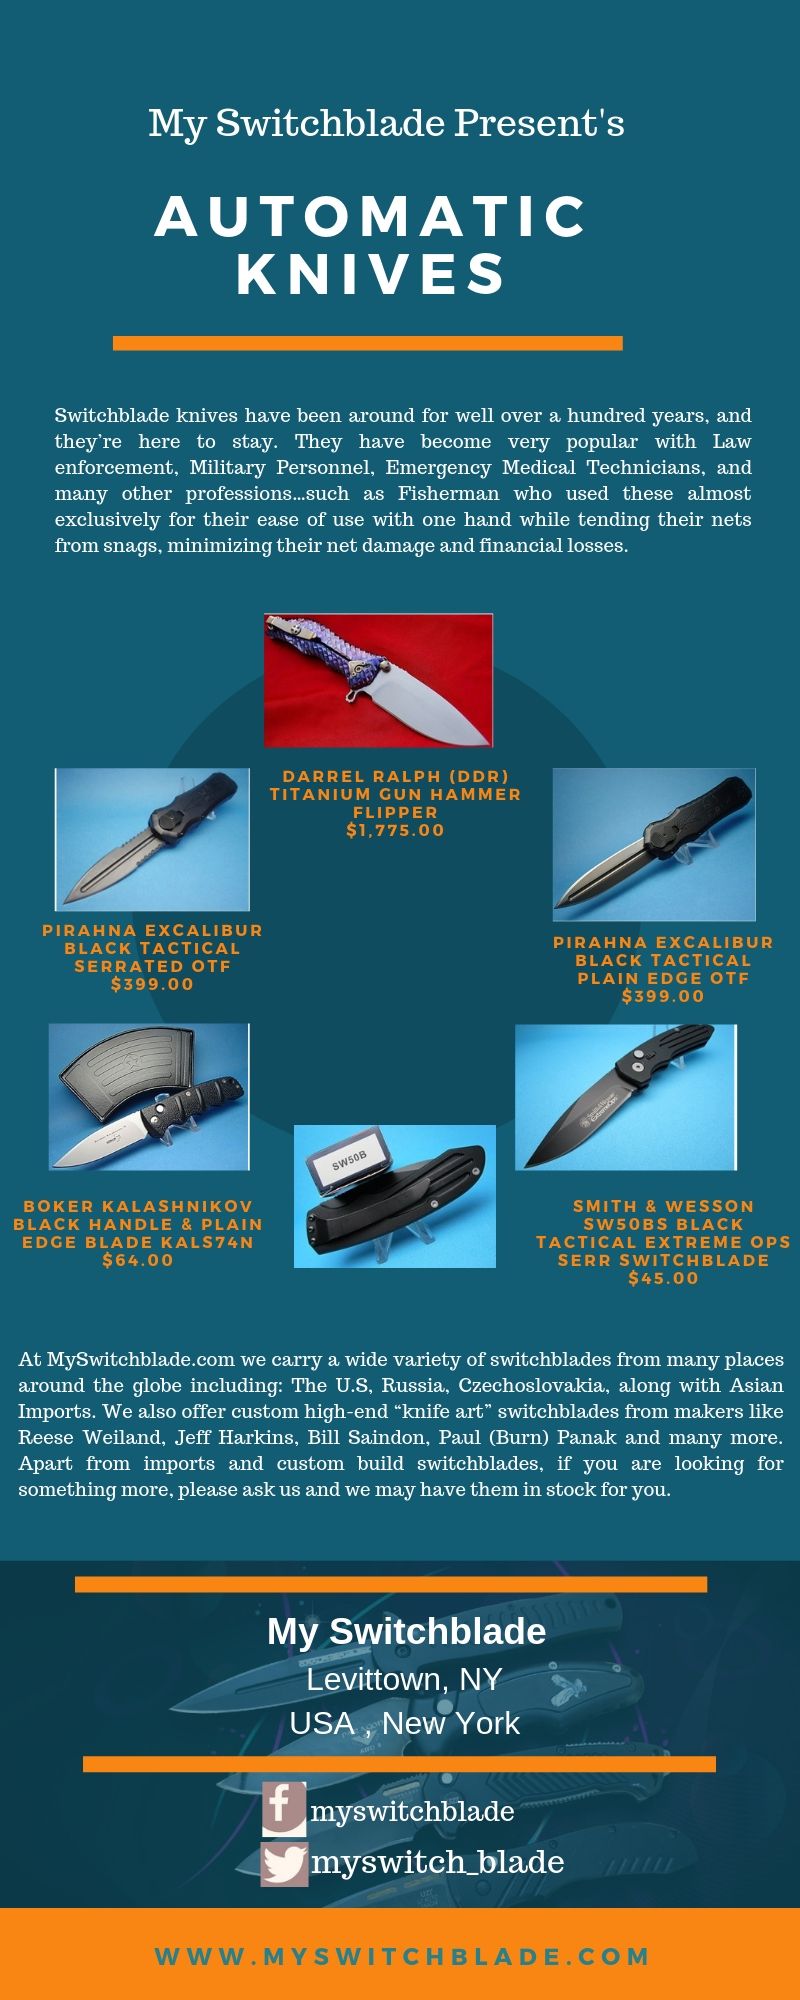 Automatic knives.jpg  by Myswitchblade